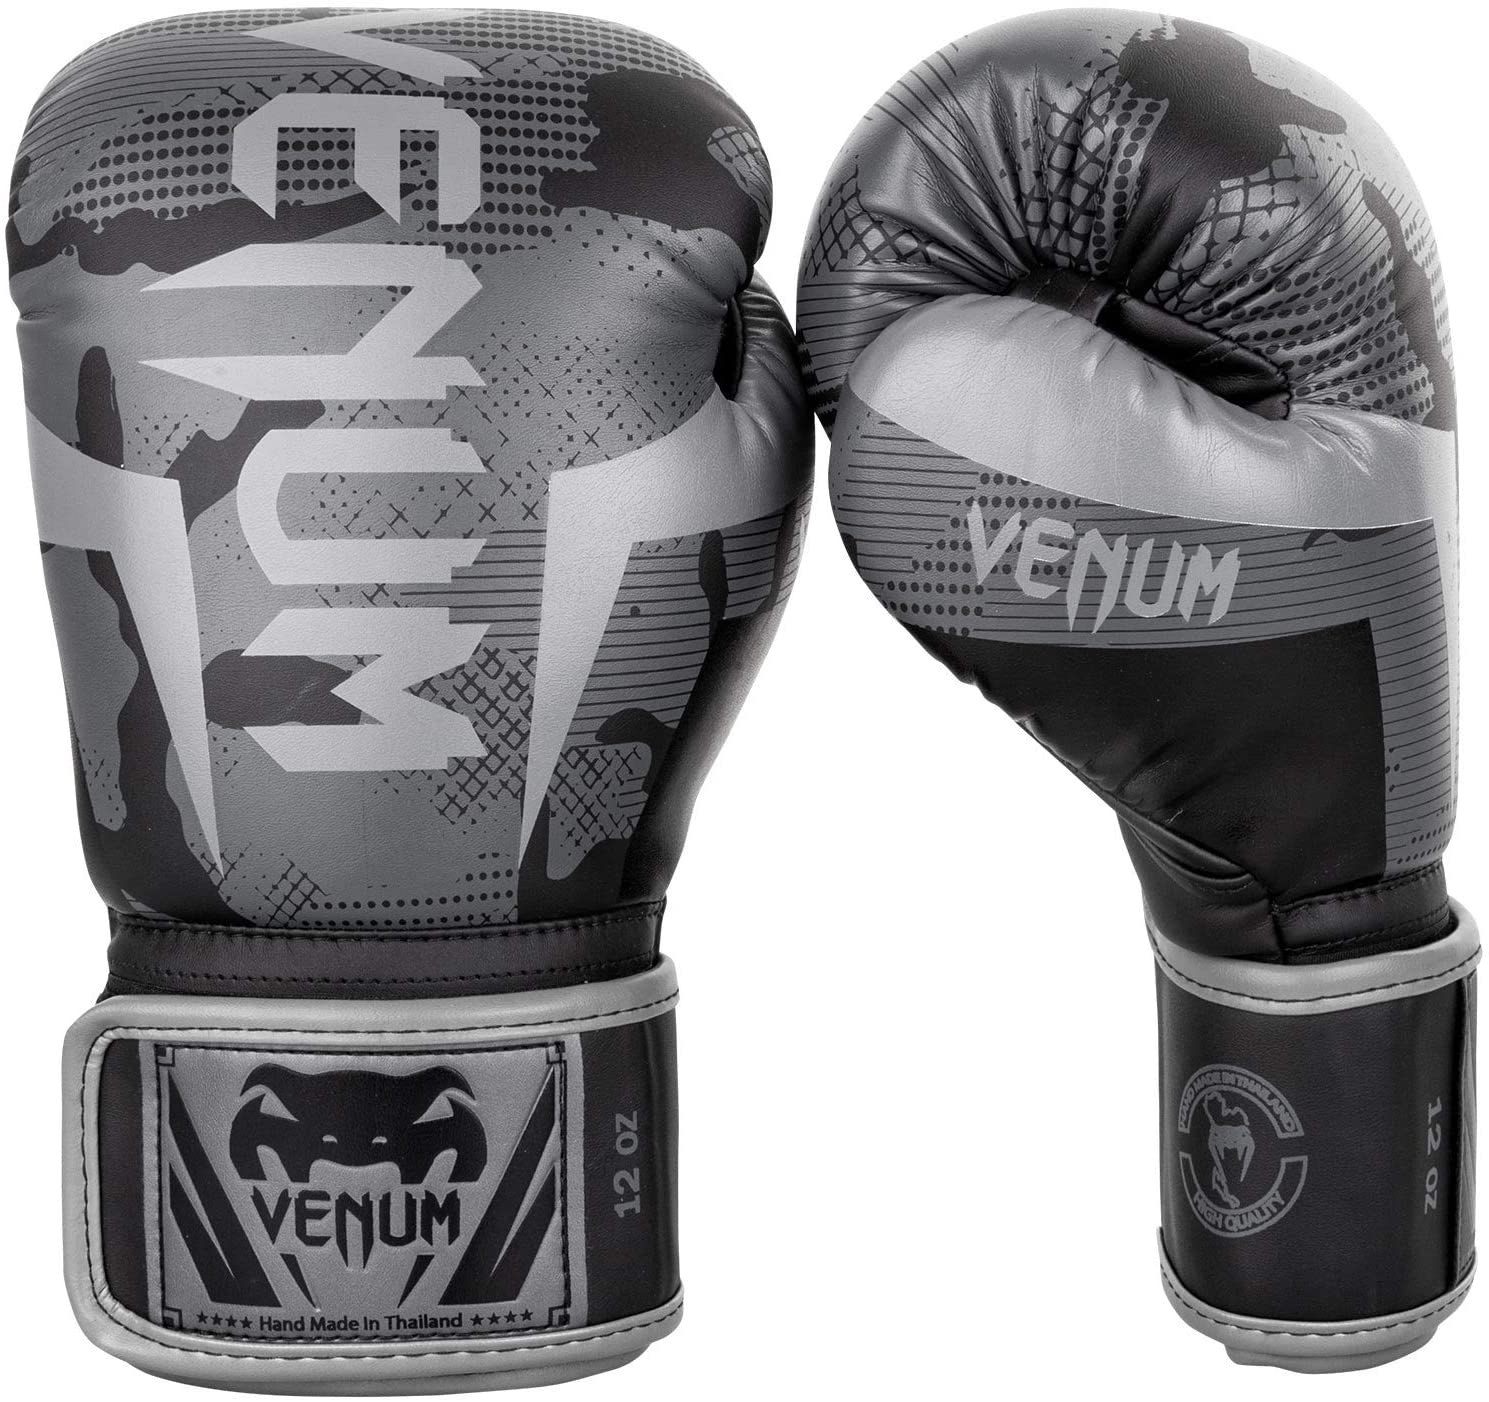 Byakko vs. Hayabusa: Which Boxing Glove Beats the Competition?